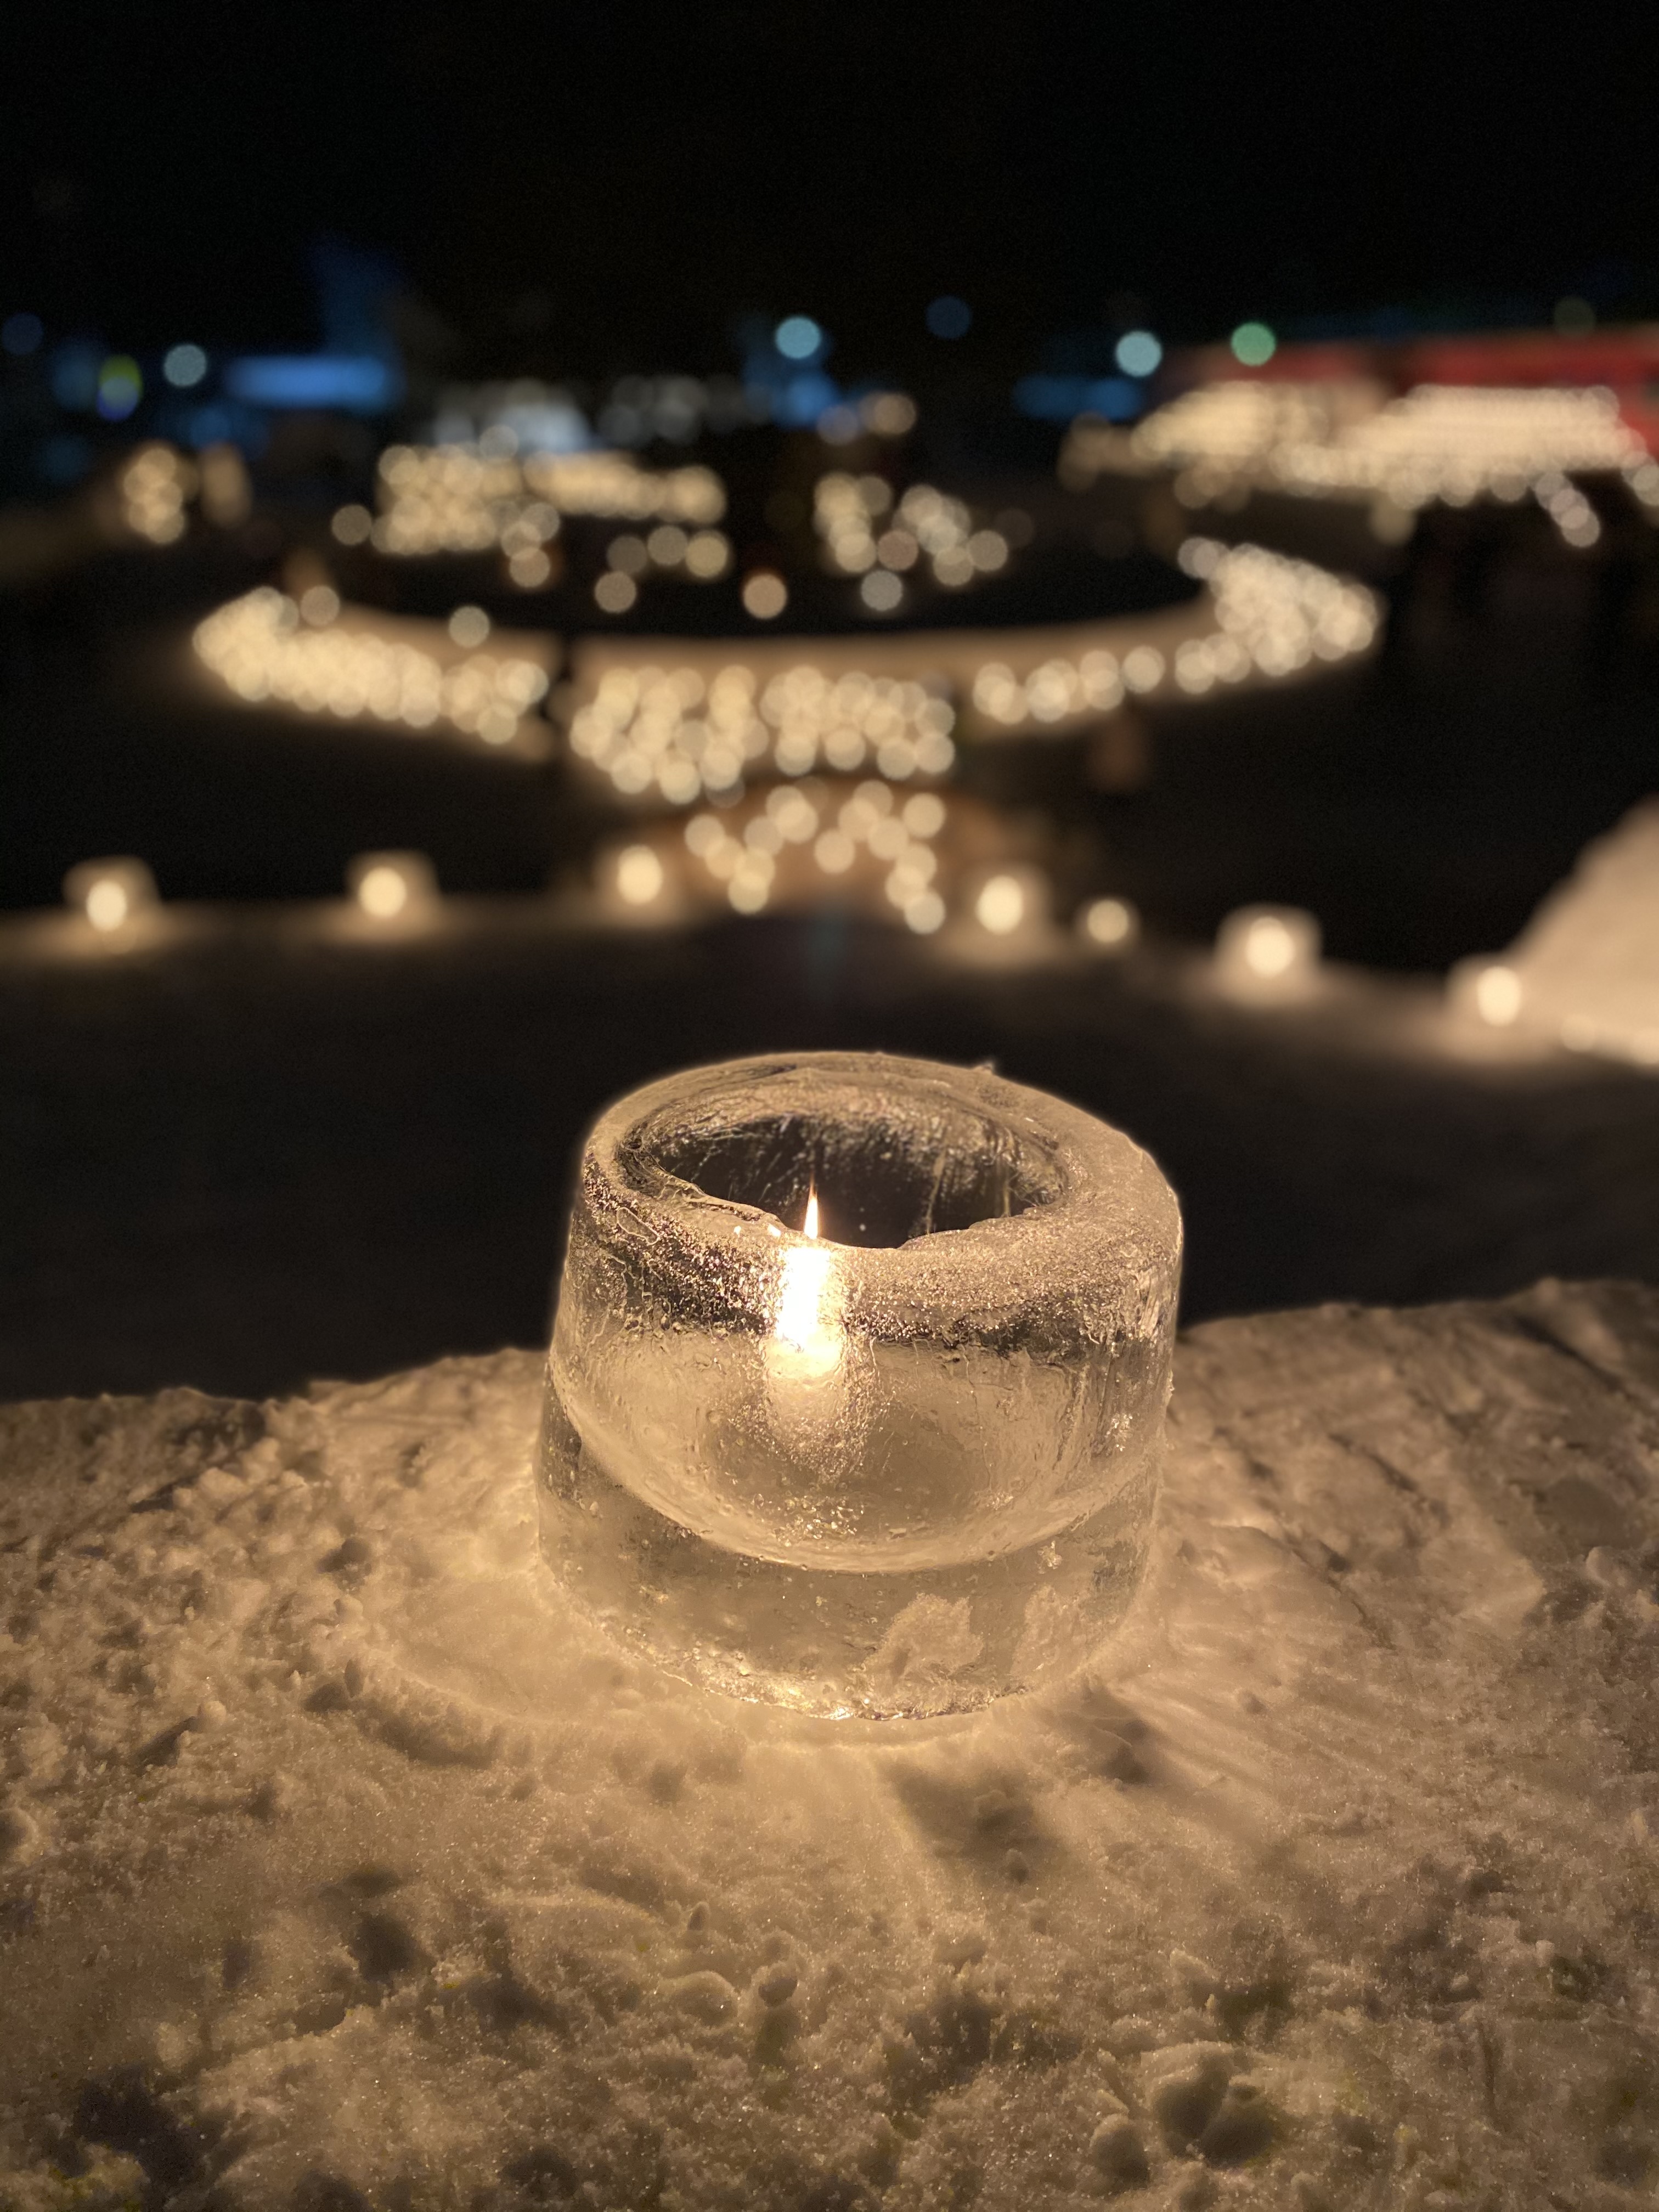 File:Ice candle festival.jpg - Wikipedia